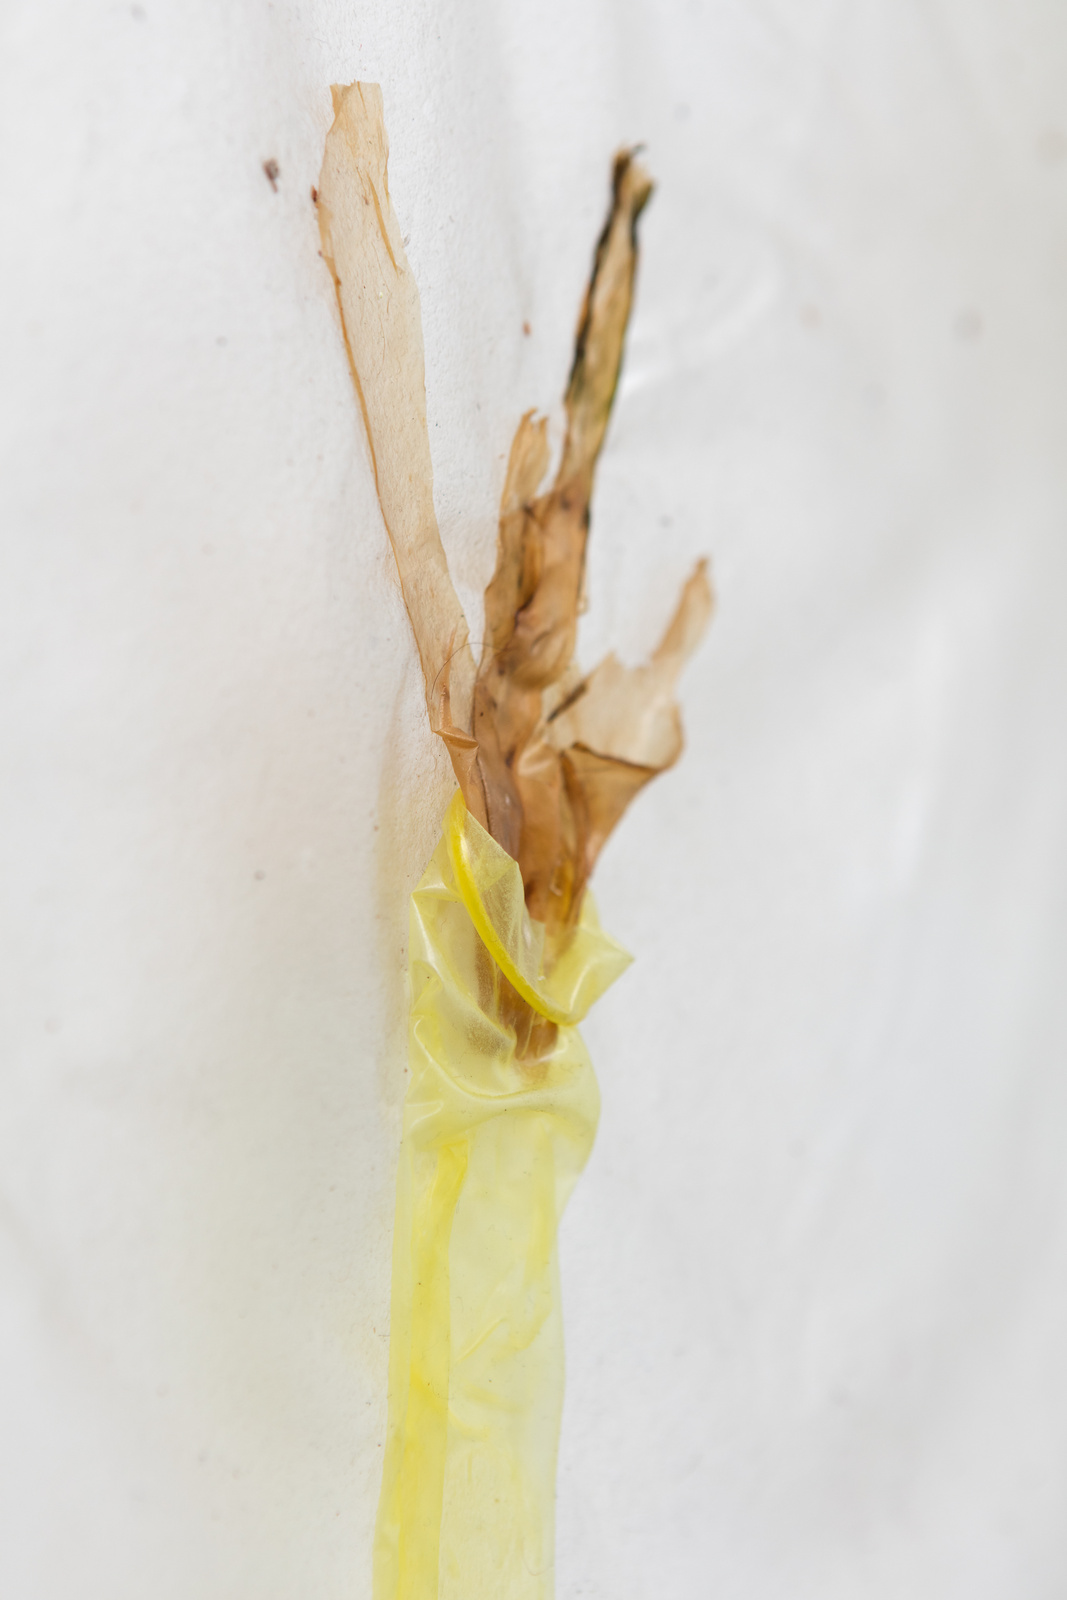 6.Aude Pariset. Flower Maiden (Ecoveg), 2016. Bioplastic, UV print on bioplastic, laser transfer print, condom, seaweed, wood, paint. 60 x 90 cm 2